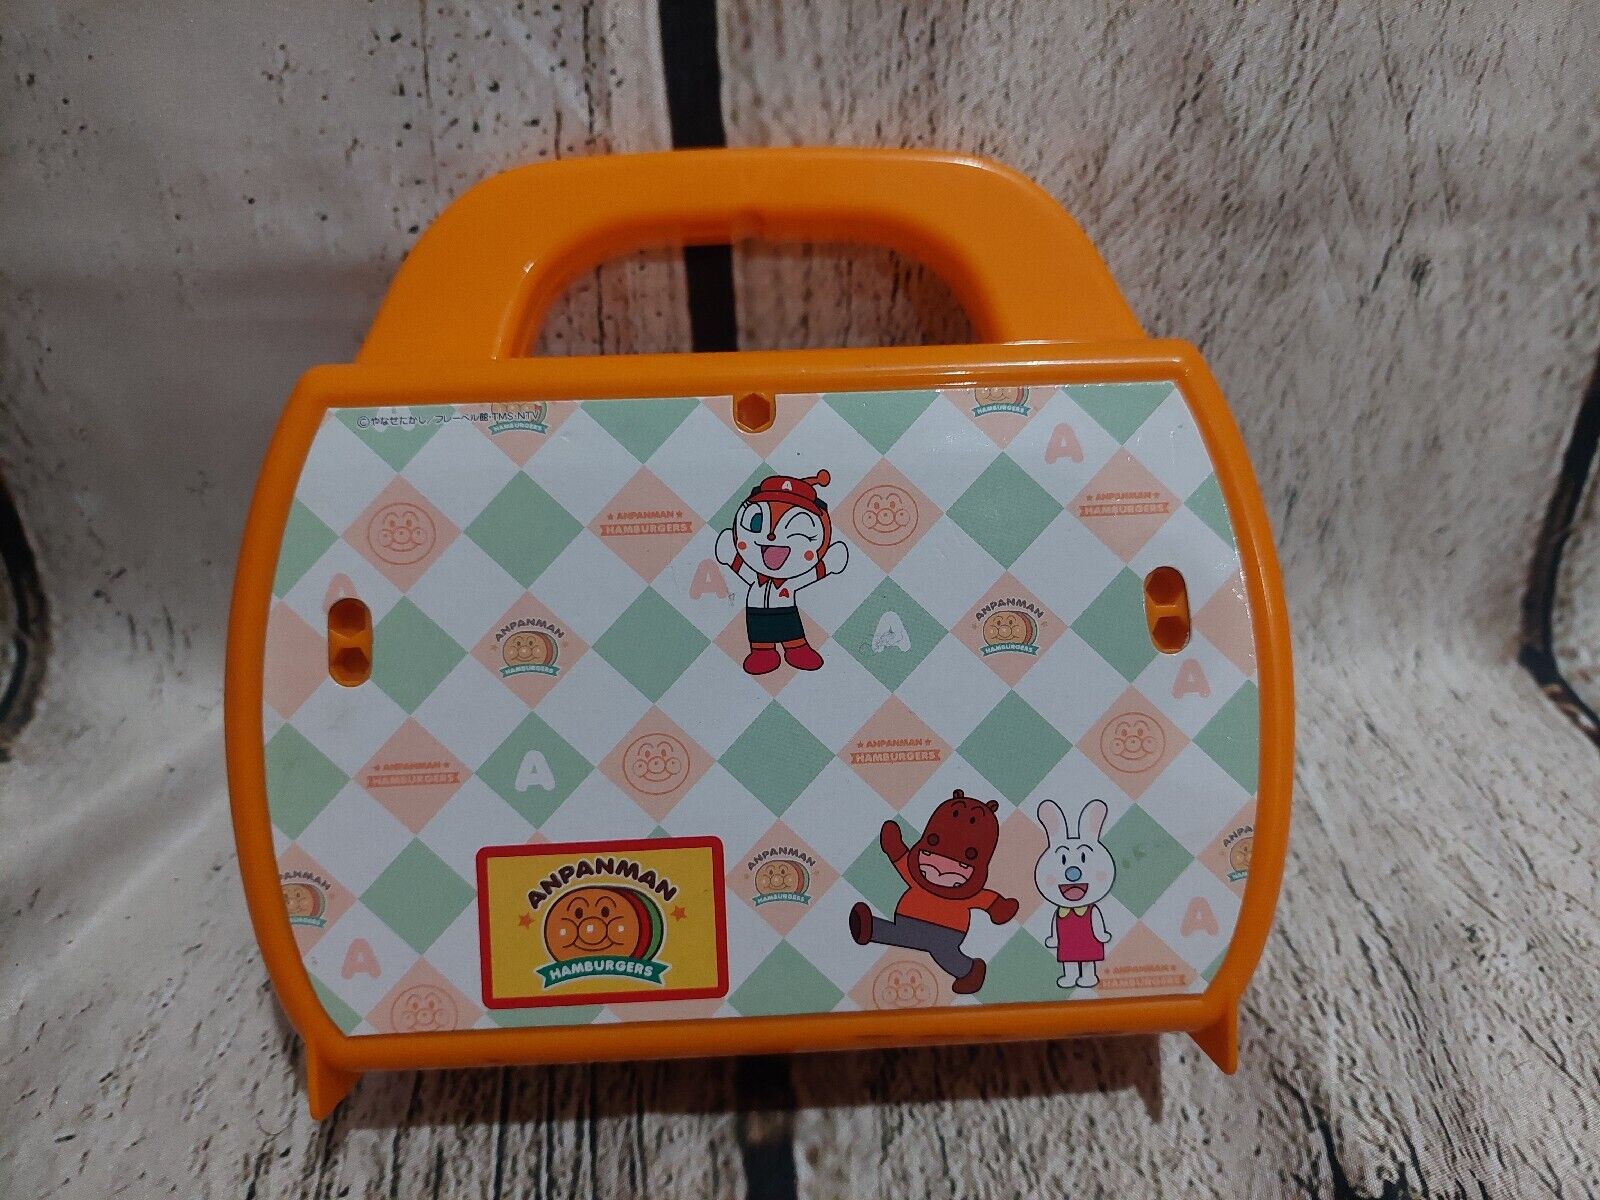 Vintage Anpanman Japan Hamburgers Shop Orange Suitcase Animation Mini Playset